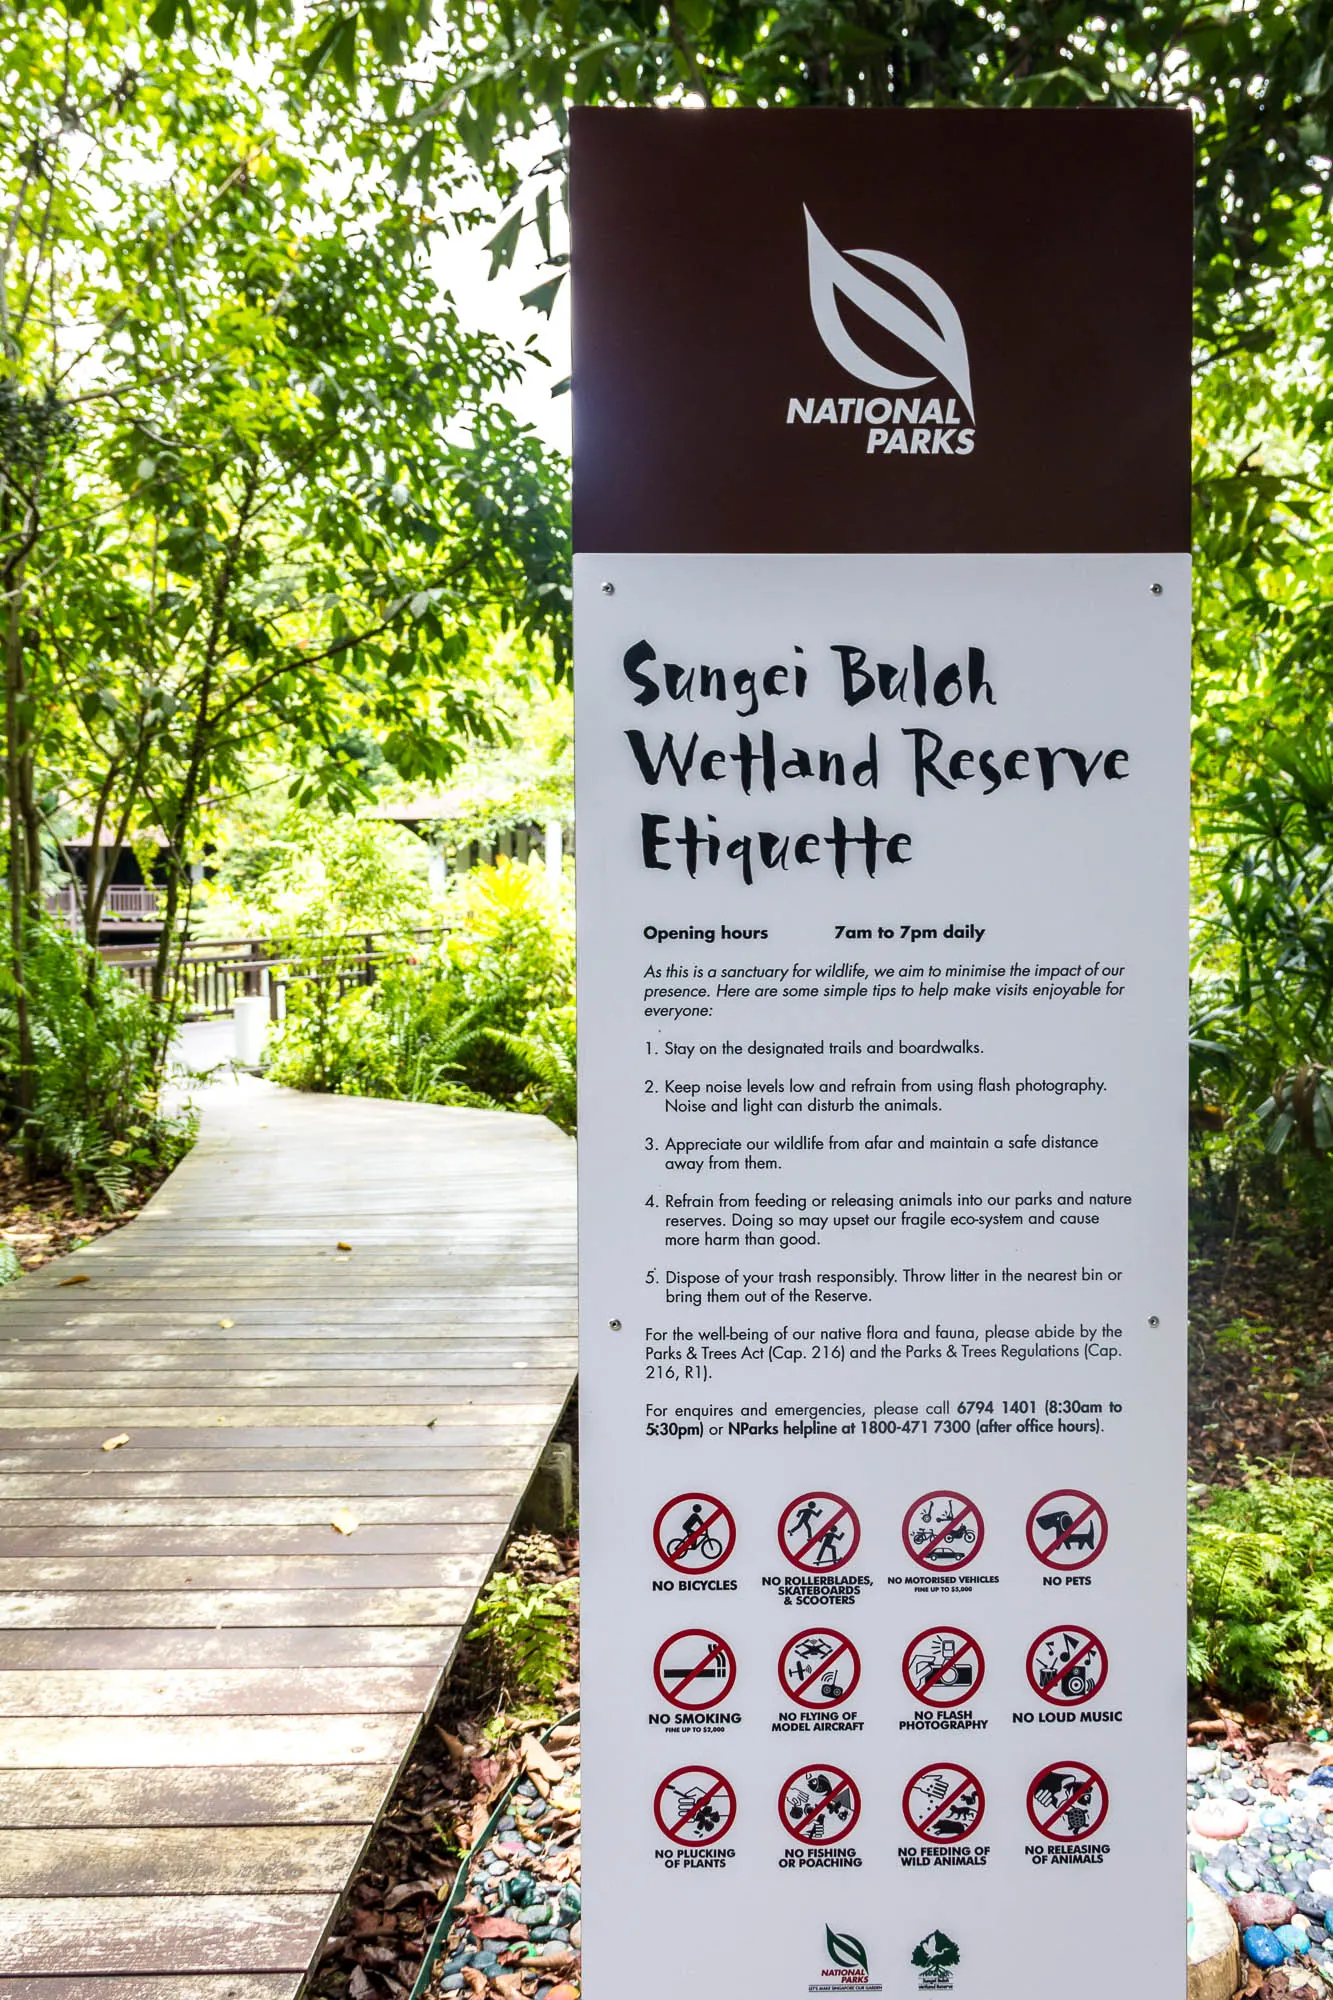 Sungei Buloh Wetland Reserve Etiquette, Kranji Countryside, Singapore